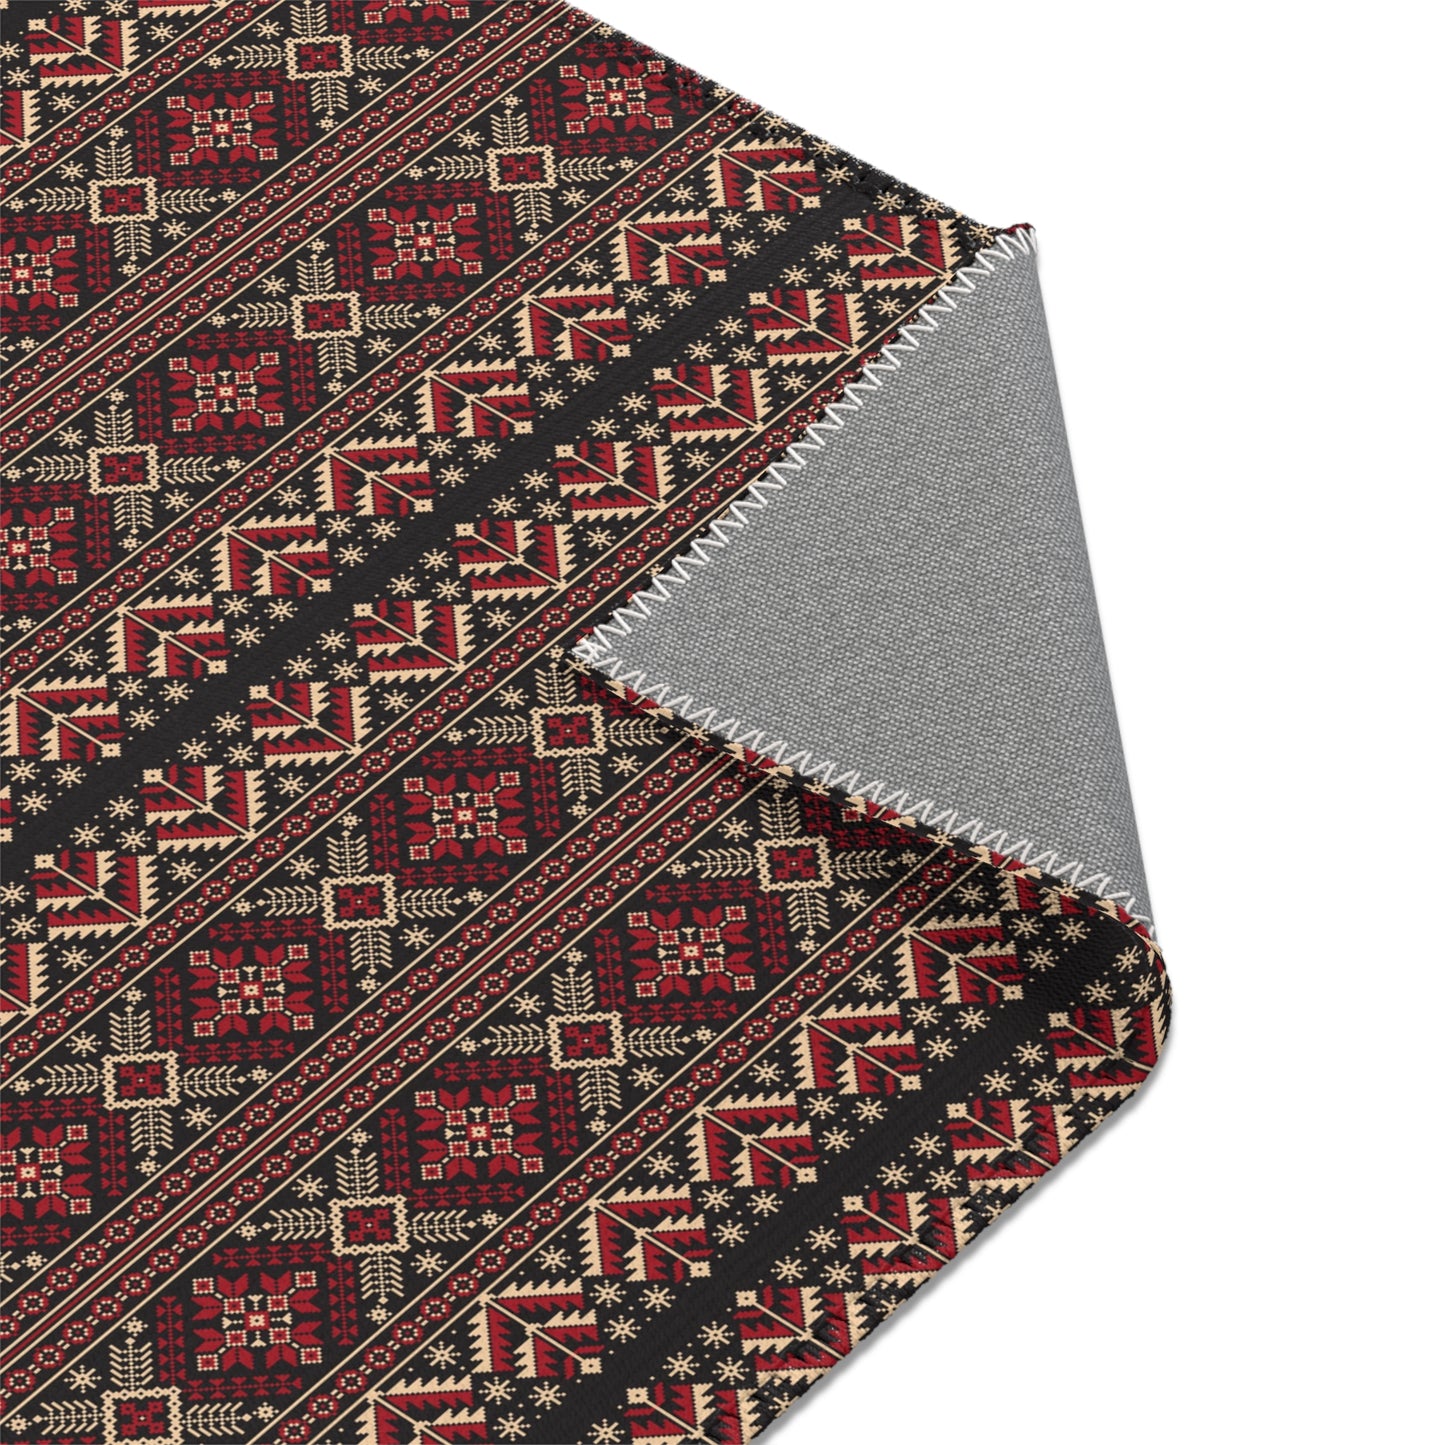 Niccie's Luxurious Arabic Pattern Area Rug Oriental Carpets